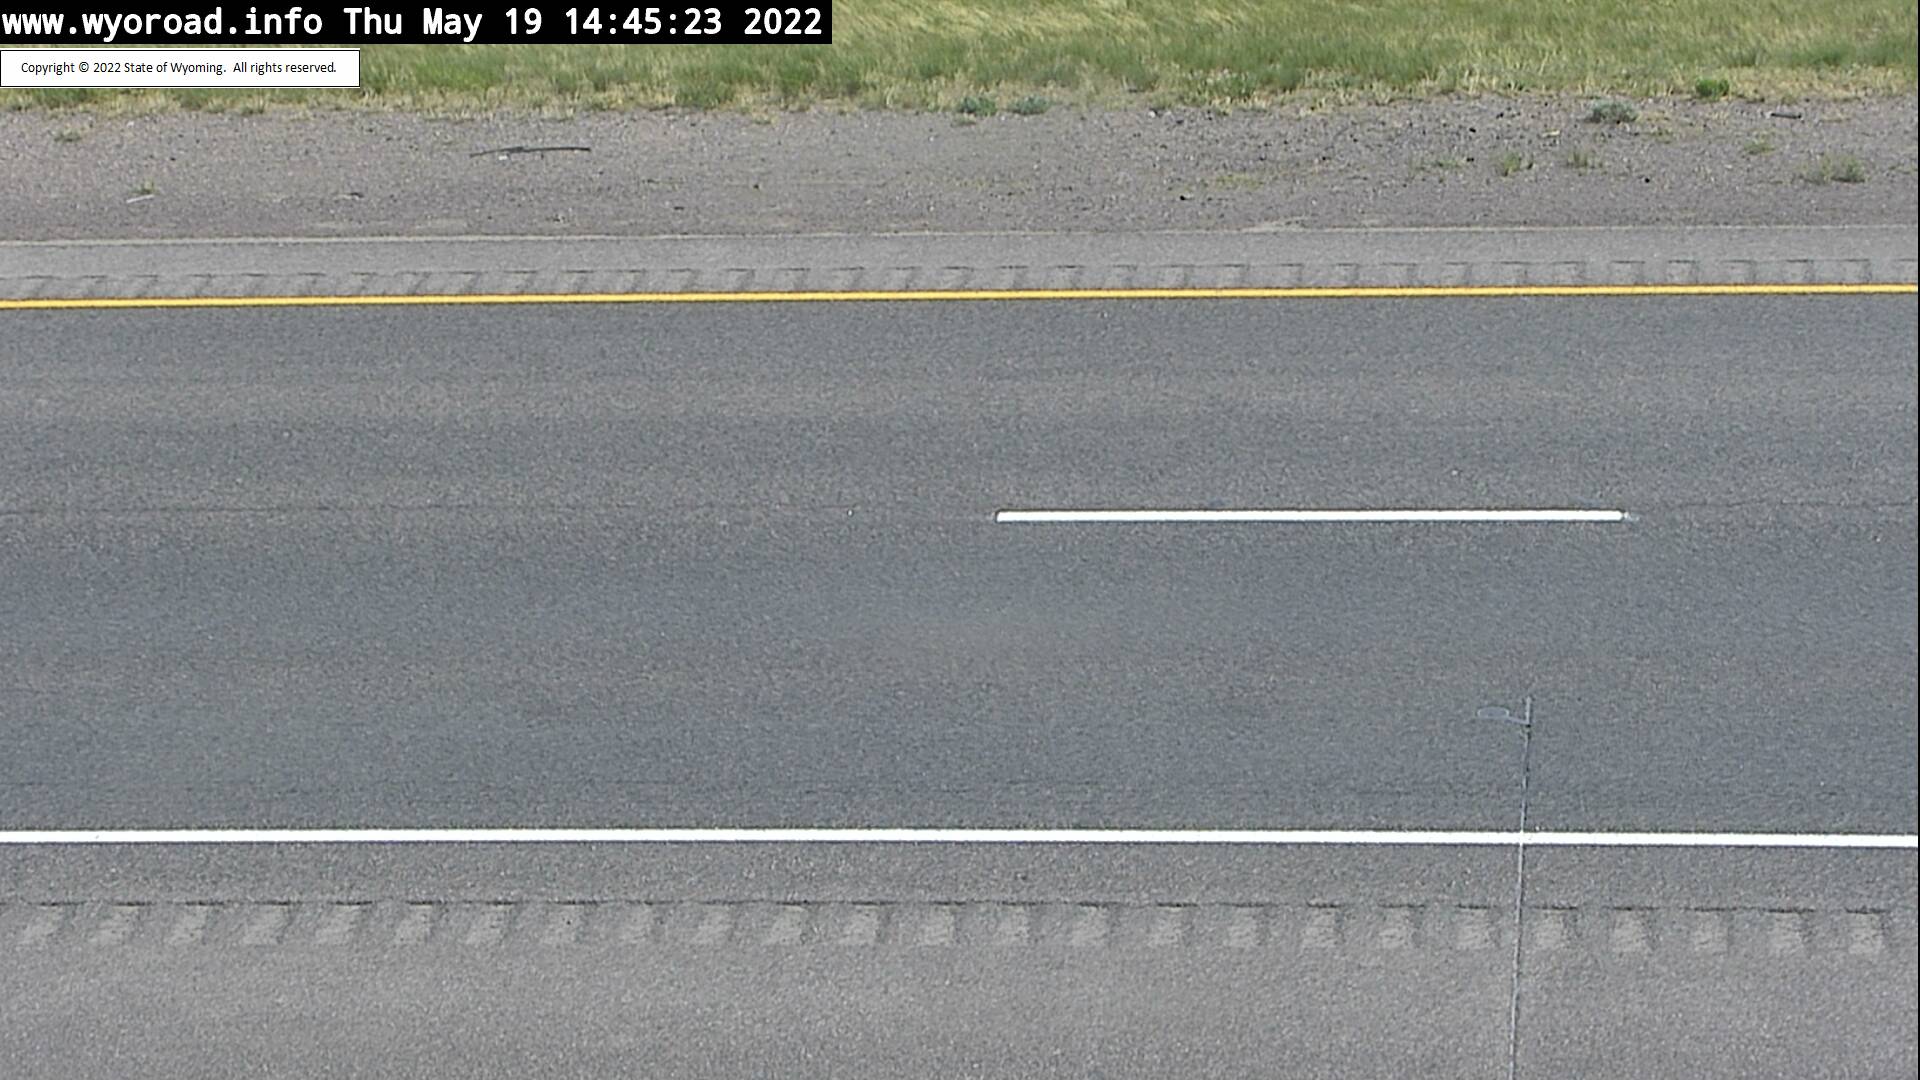 MP 353.0 - [I-80 MM353 Road Surface] - USA